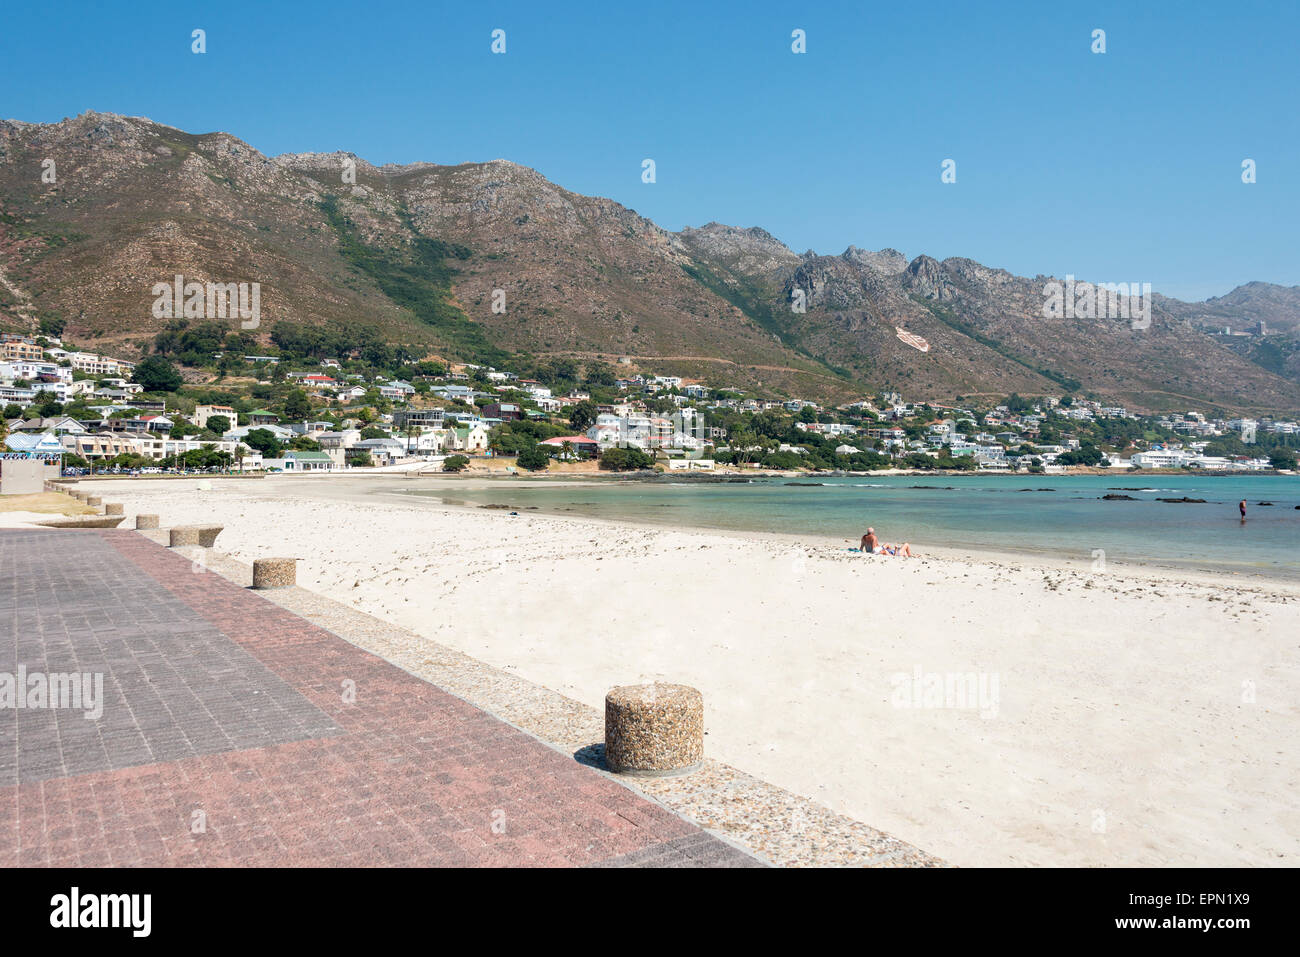 Beach view, Gordon's Bay, Helderberg District, Cape Peninsula, Western Cape Province, Republic of South Africa Stock Photo